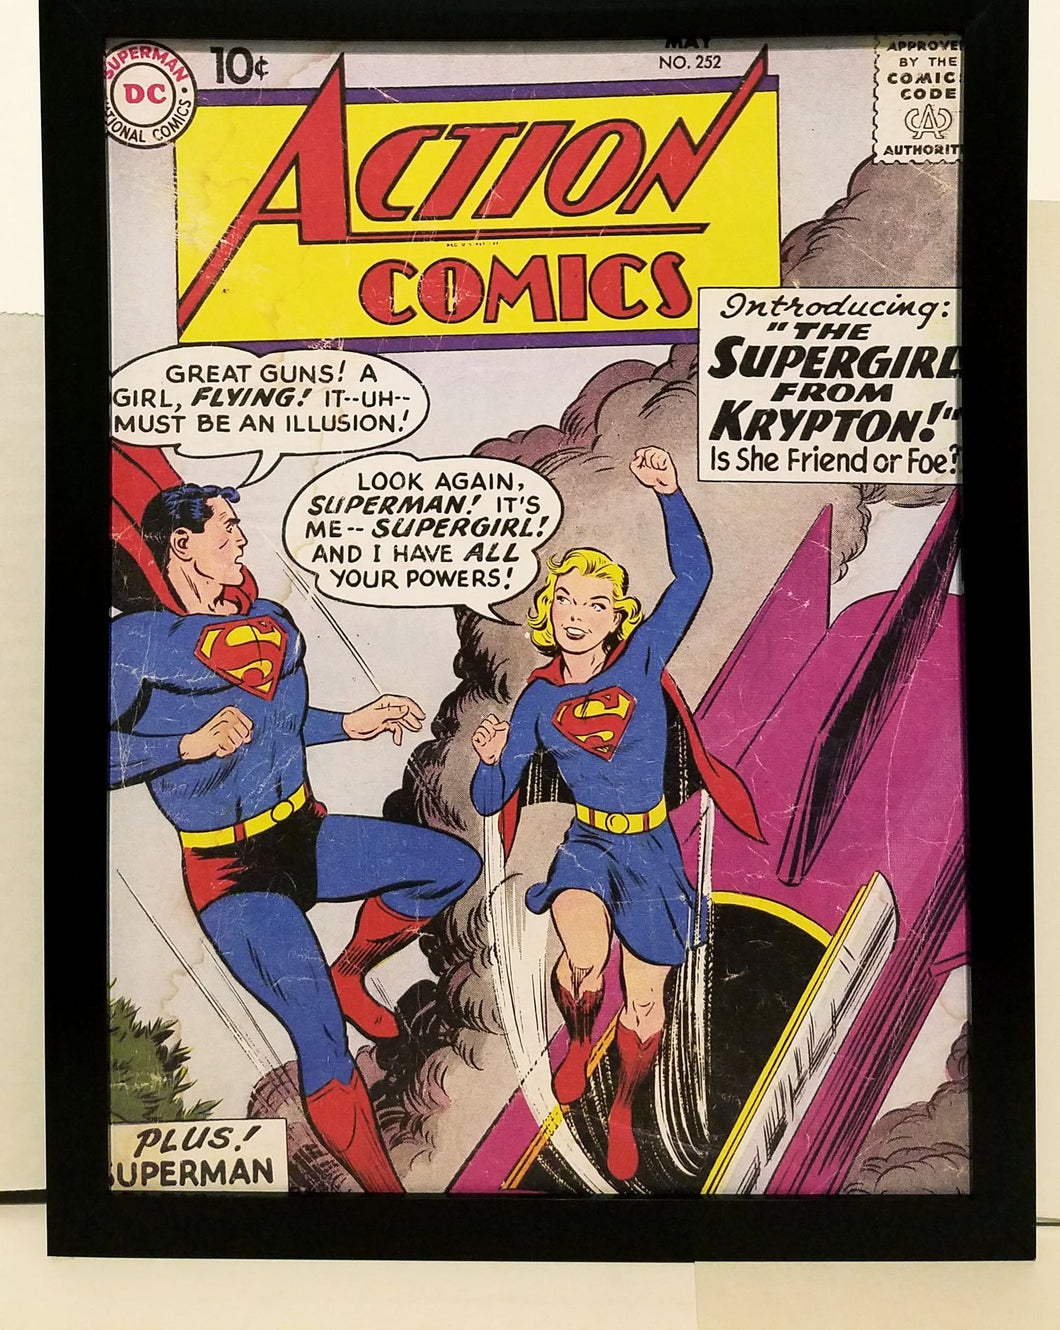 Action Comics #252 Supergirl 9x12 FRAMED Vintage 1959 DC Comics Art Print Poster